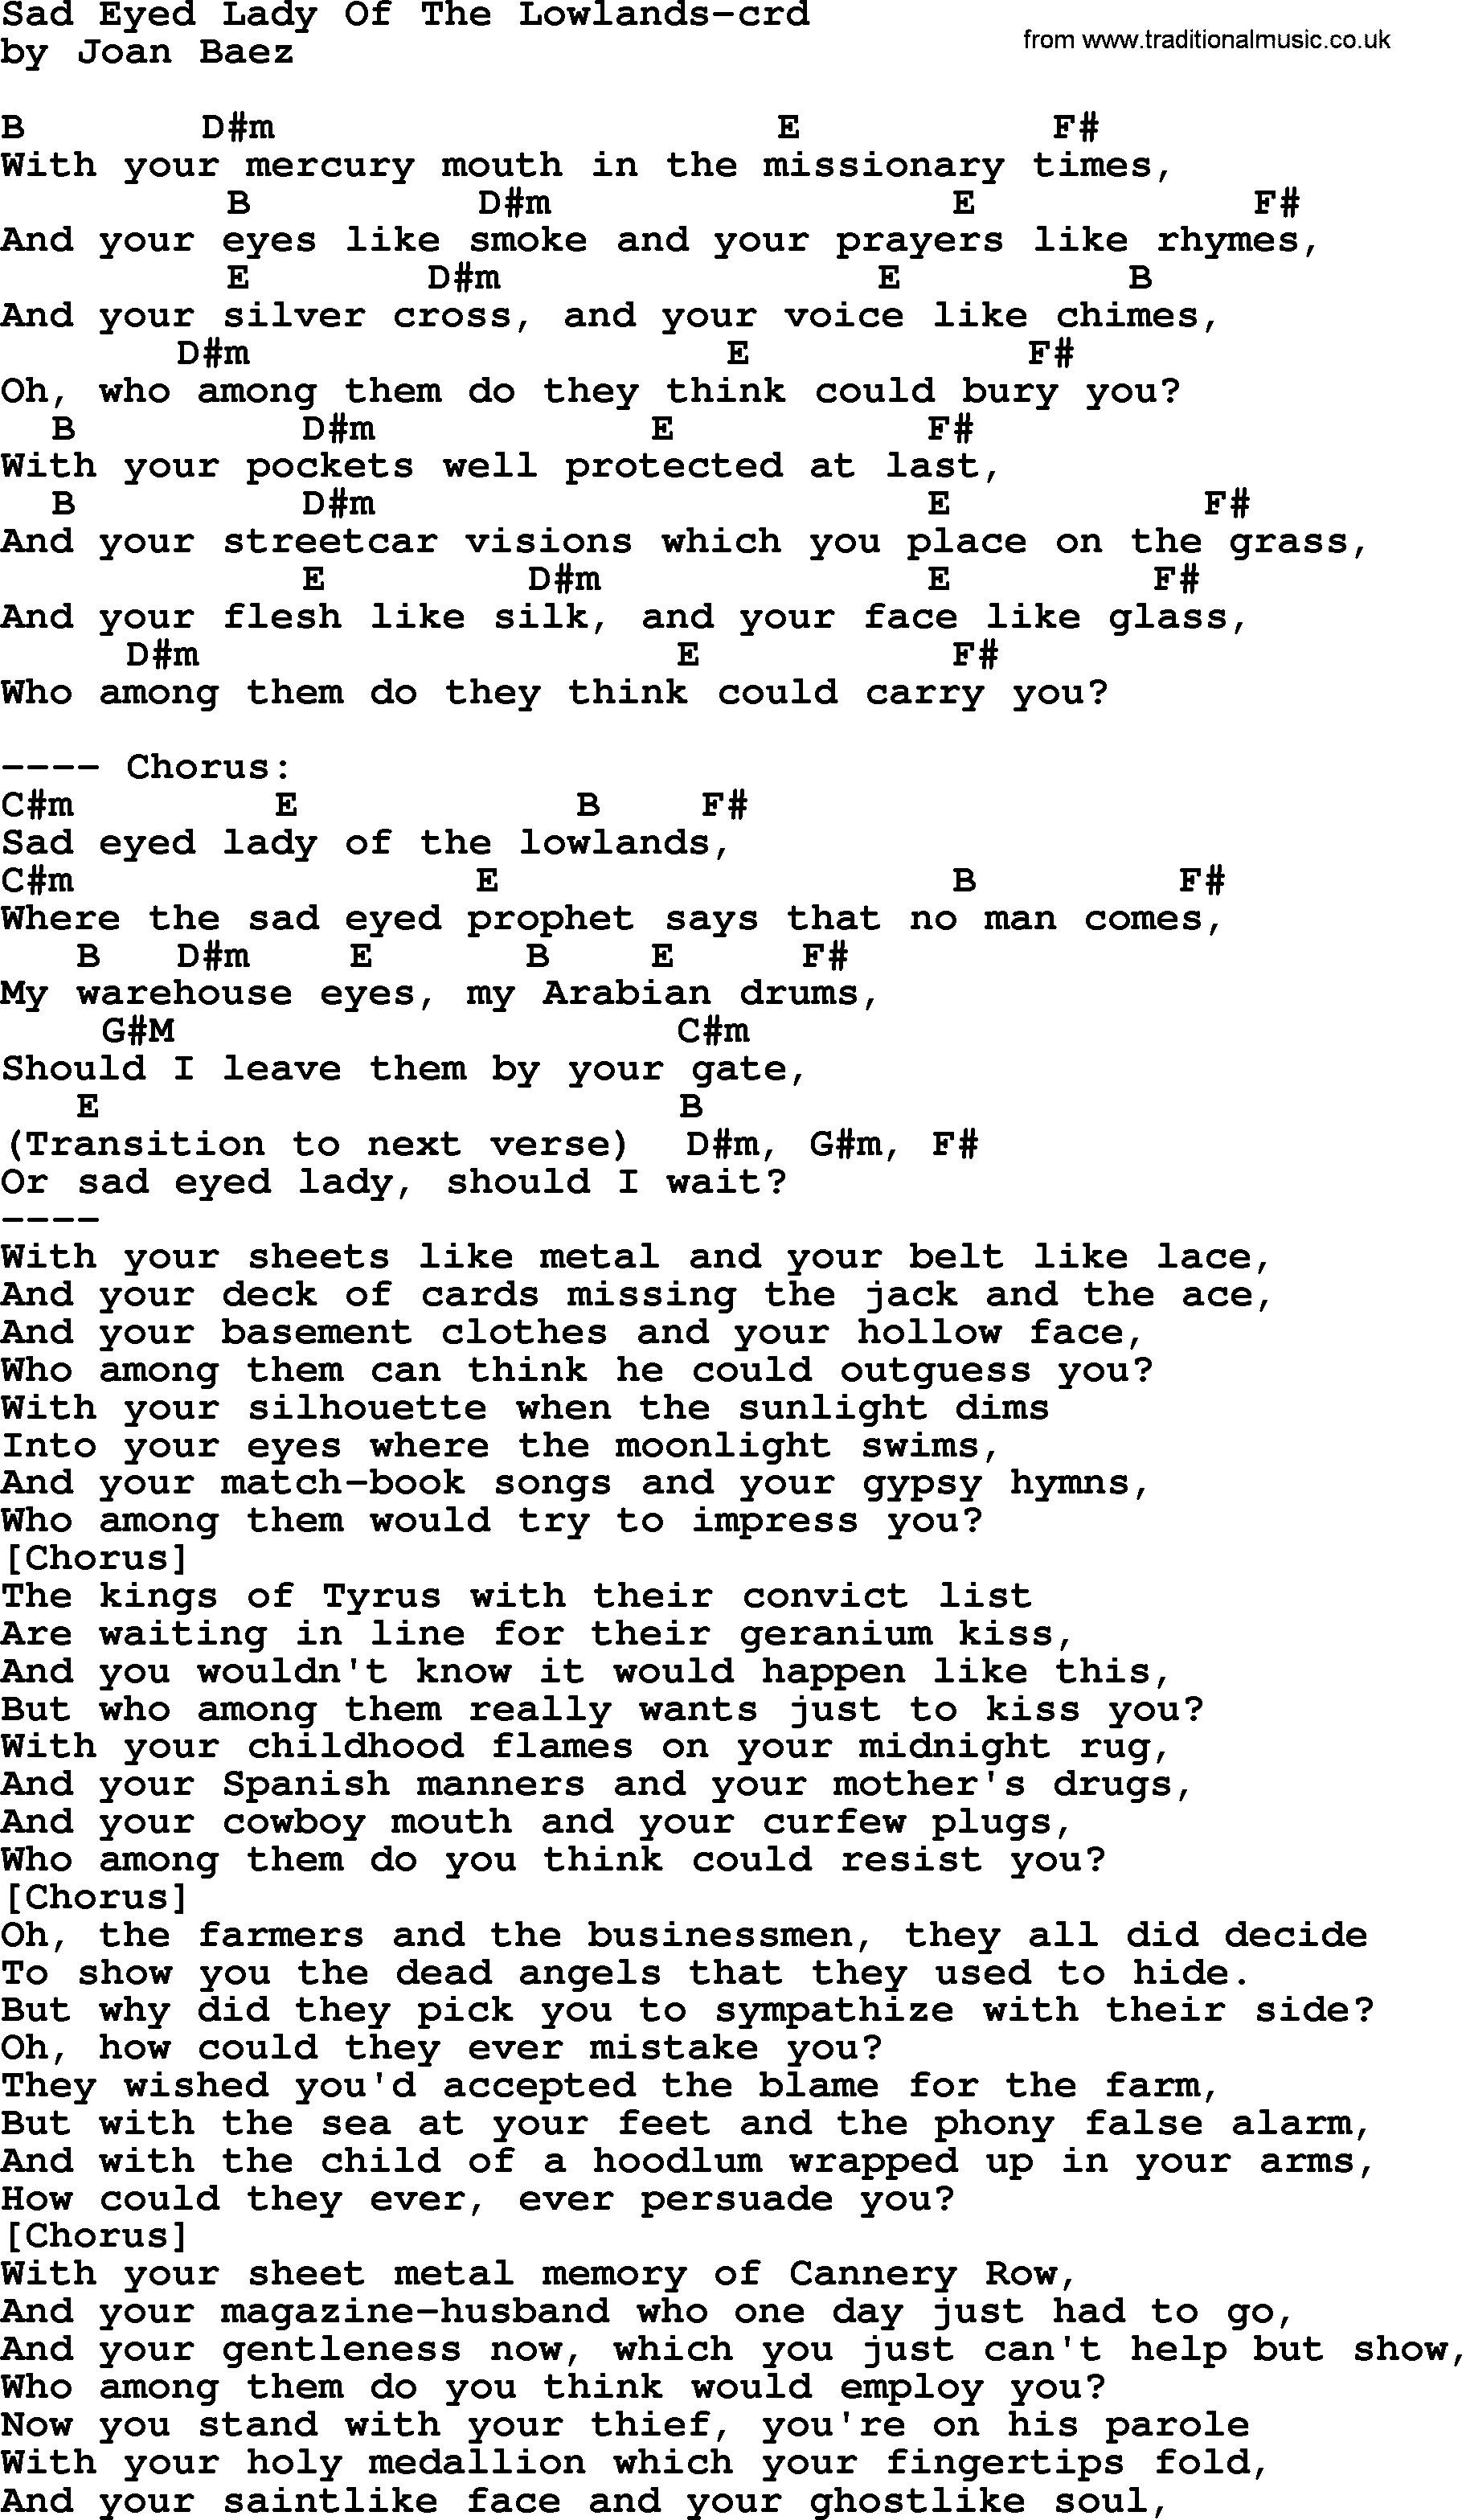 Joan Baez song Sad Eyed Lady Of The Lowlands lyrics and chords